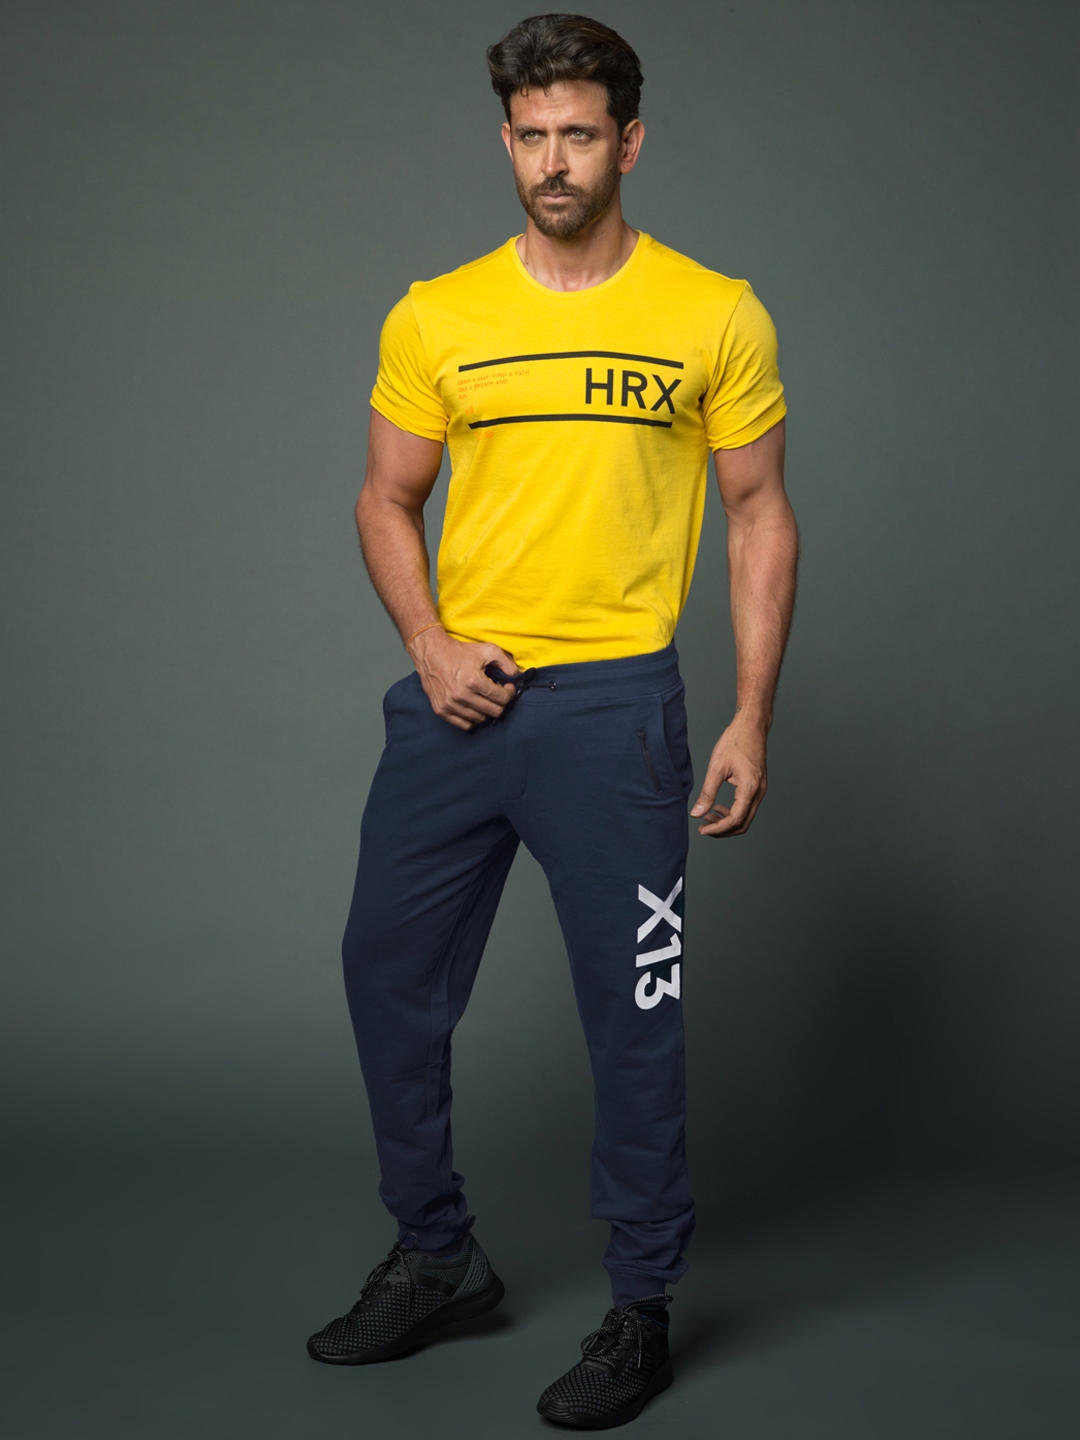 Hrx Track Pants - Buy Hrx Track Pants online in India